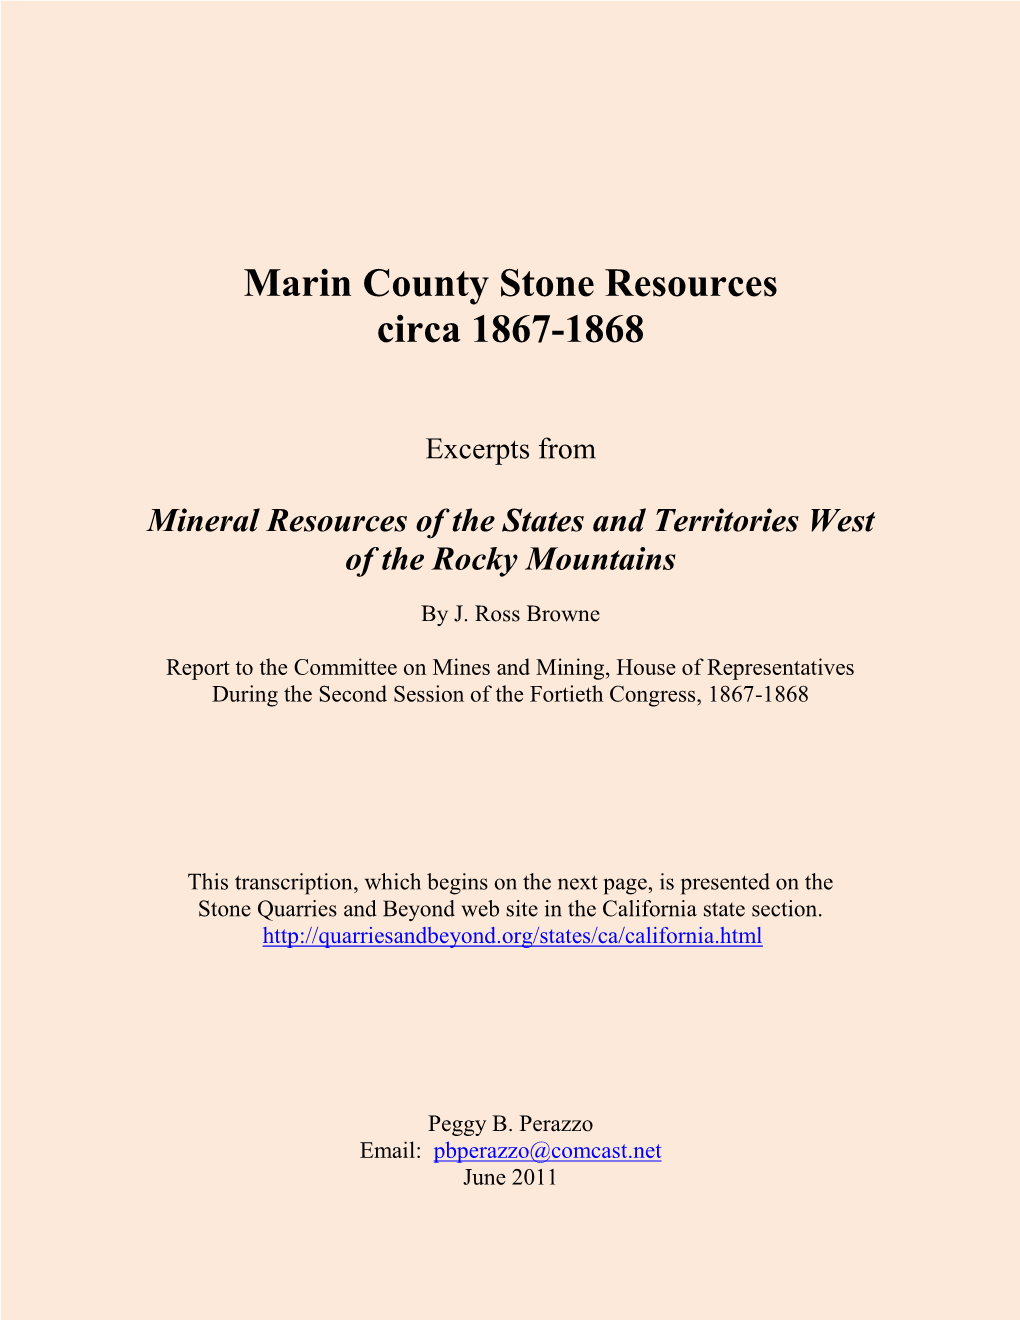 Marin County Stone Resources Circa 1867-1868